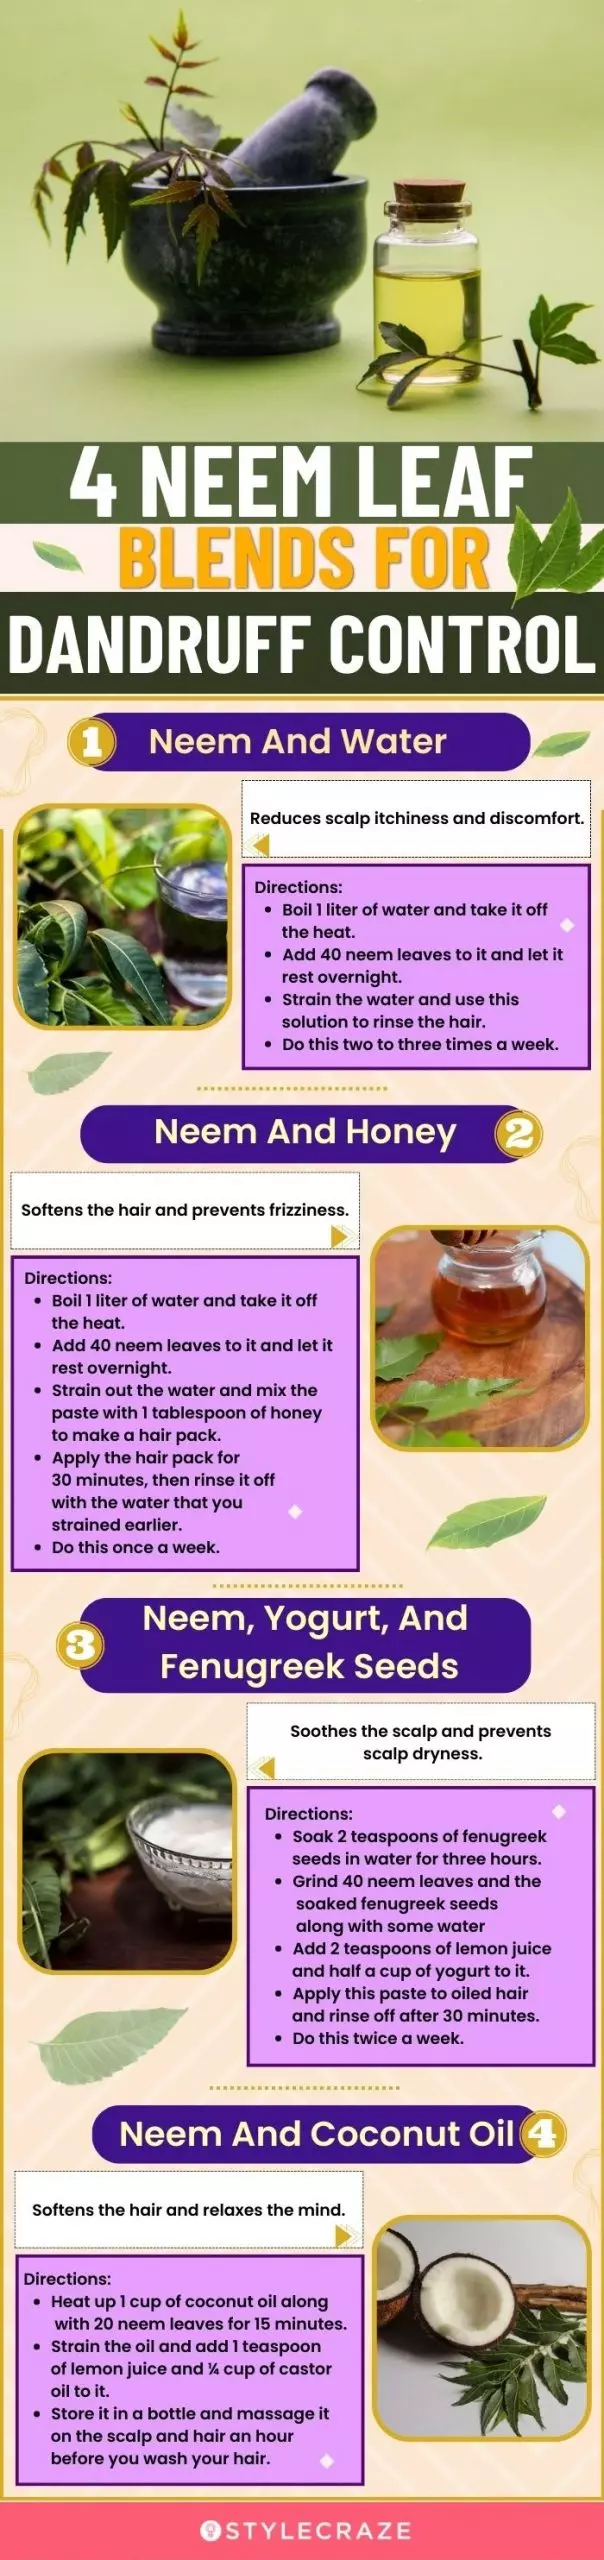 4 neem leaf blends for dandruff control (infographic)